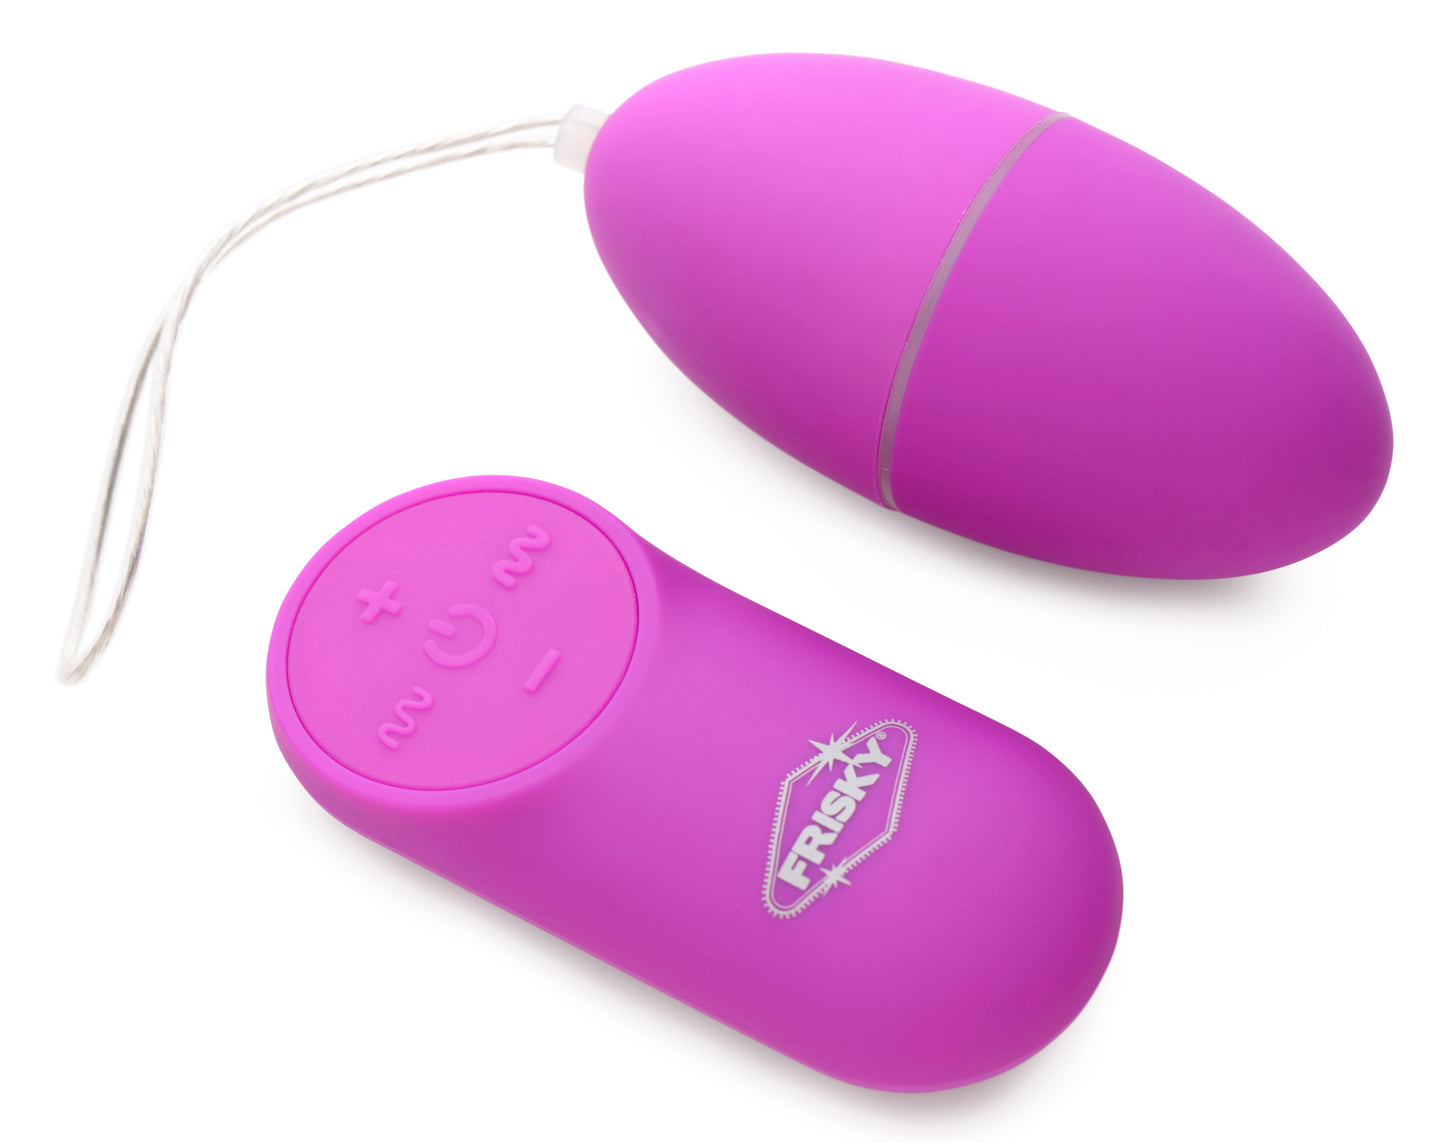 28x Scrambler Vibrating Egg With Remote Control - Purple